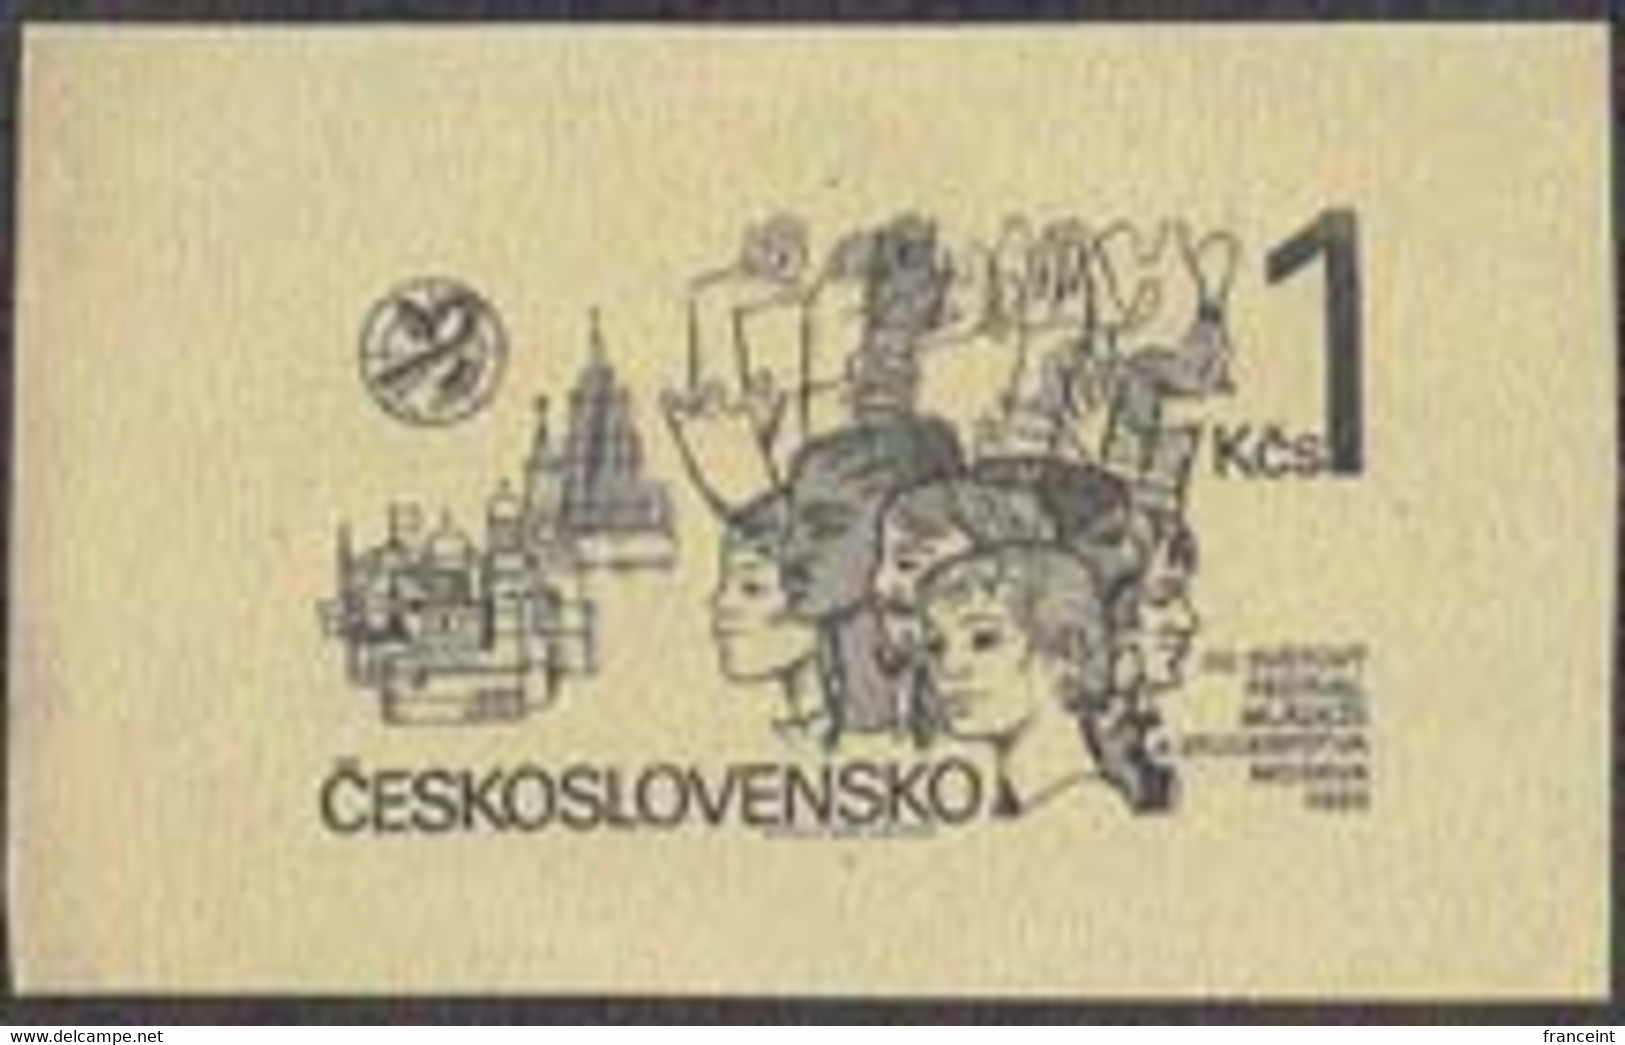 CZECHOSLOVAKIA (1985) Students With Hands Raised. Die Proof In Black. Scott No 2568, Yvert No 2637. - Proofs & Reprints